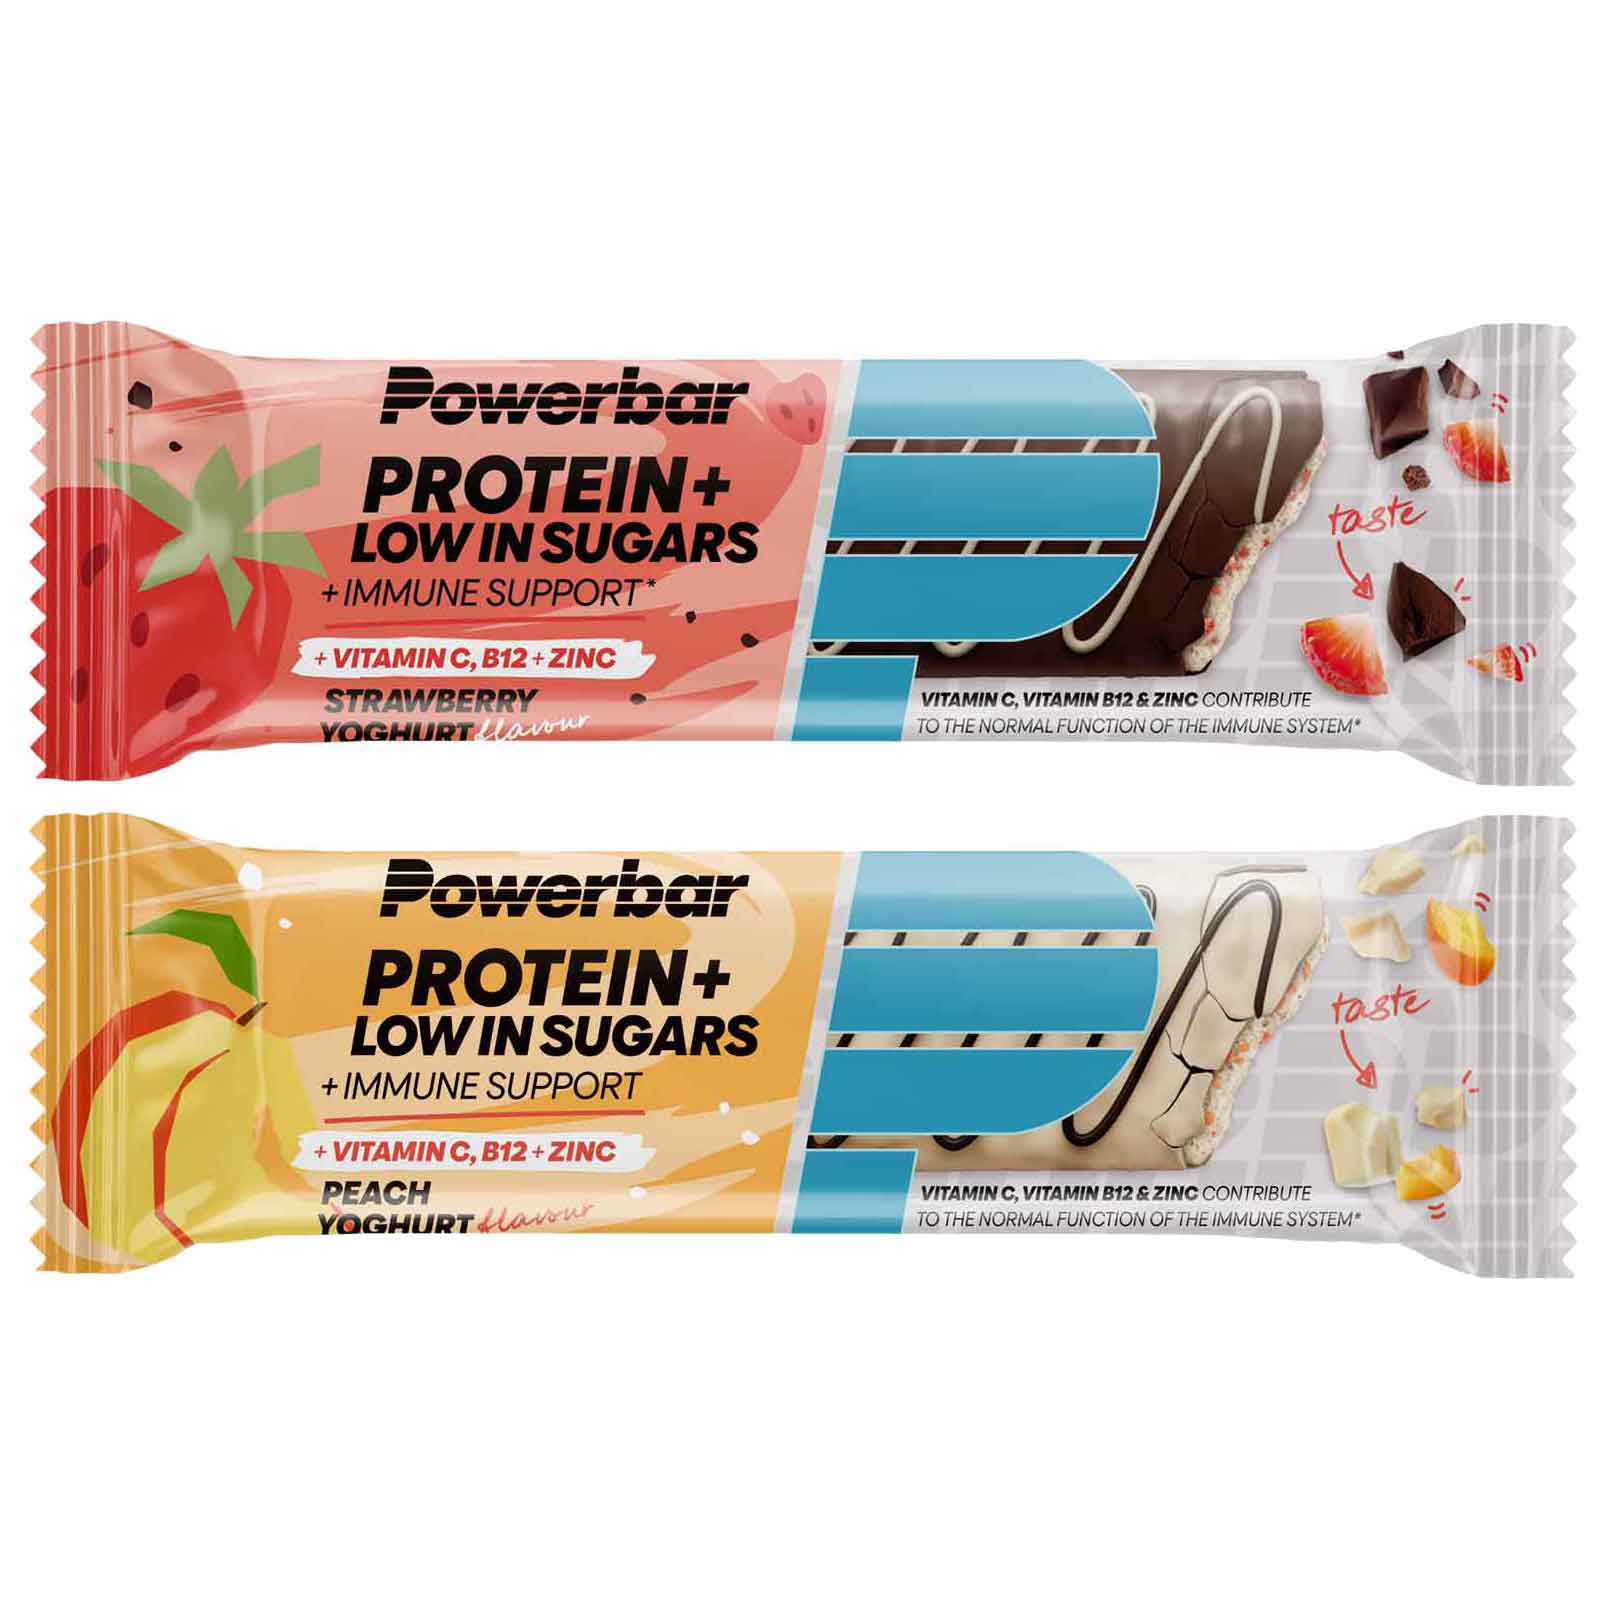 Productfoto van Powerbar Protein+ Low in Sugars Immune Support - Eiwitreep - 35g